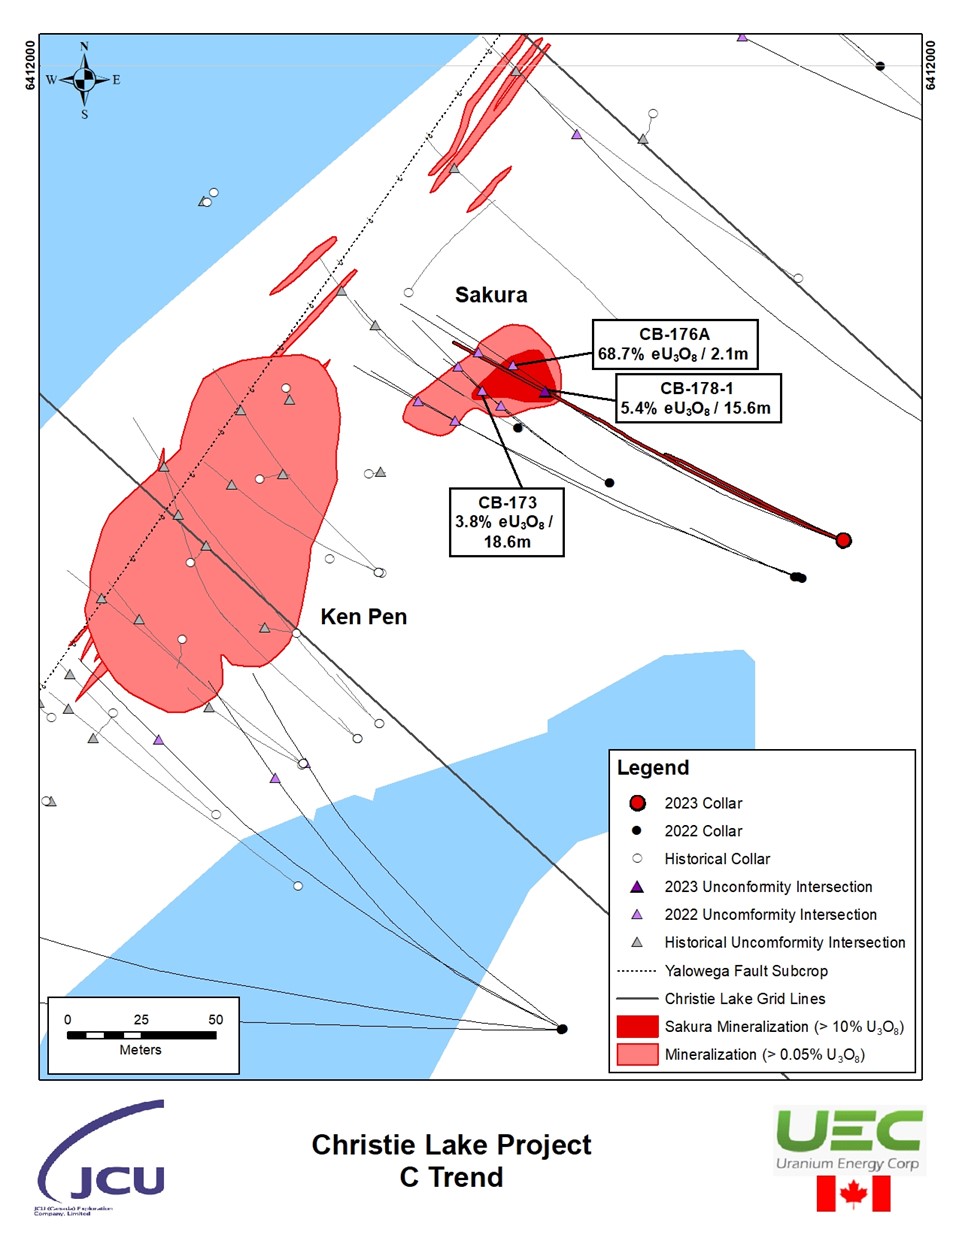 akura Zone Mineralization - preliminary zone boundaries